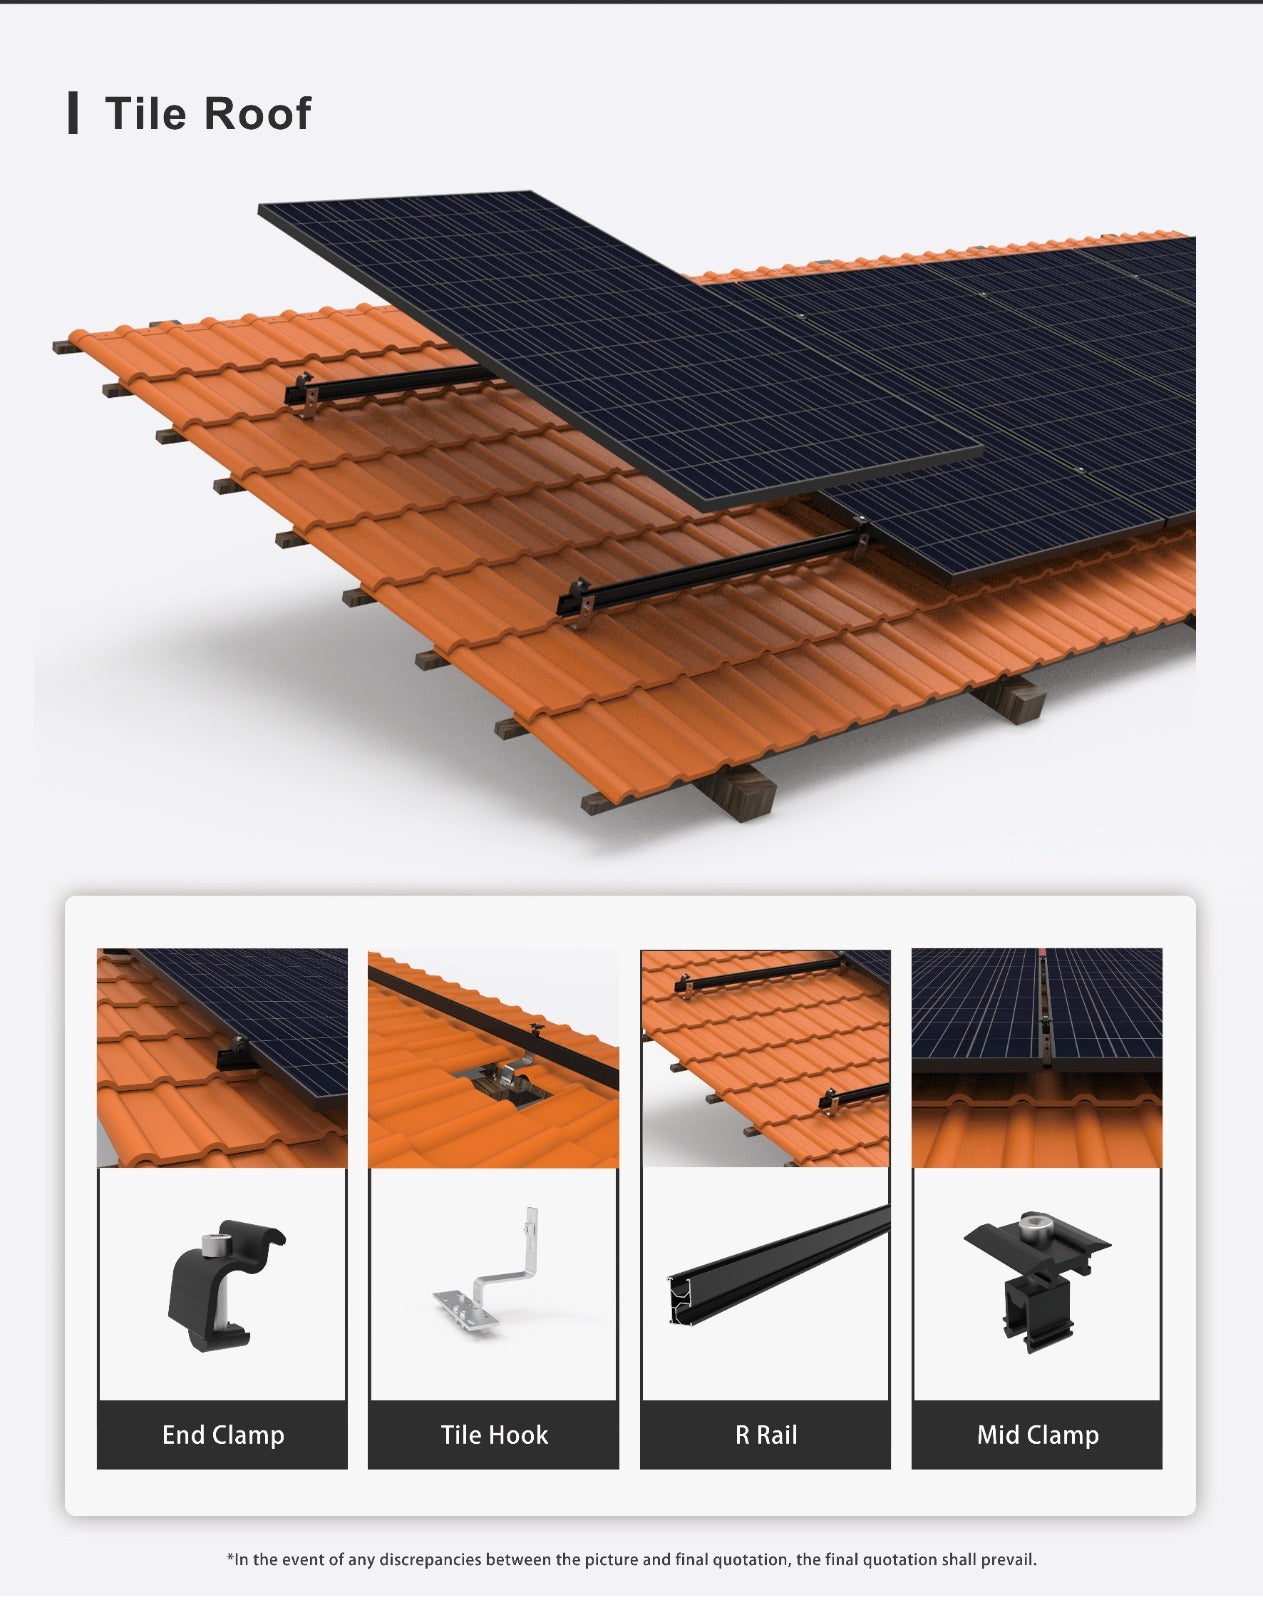 SOLARWAY High Voltage Solaranlage Komplettset 20kW | Fox ESS 20kW | Bifazial inkl. Montagesystem, App & WiFi